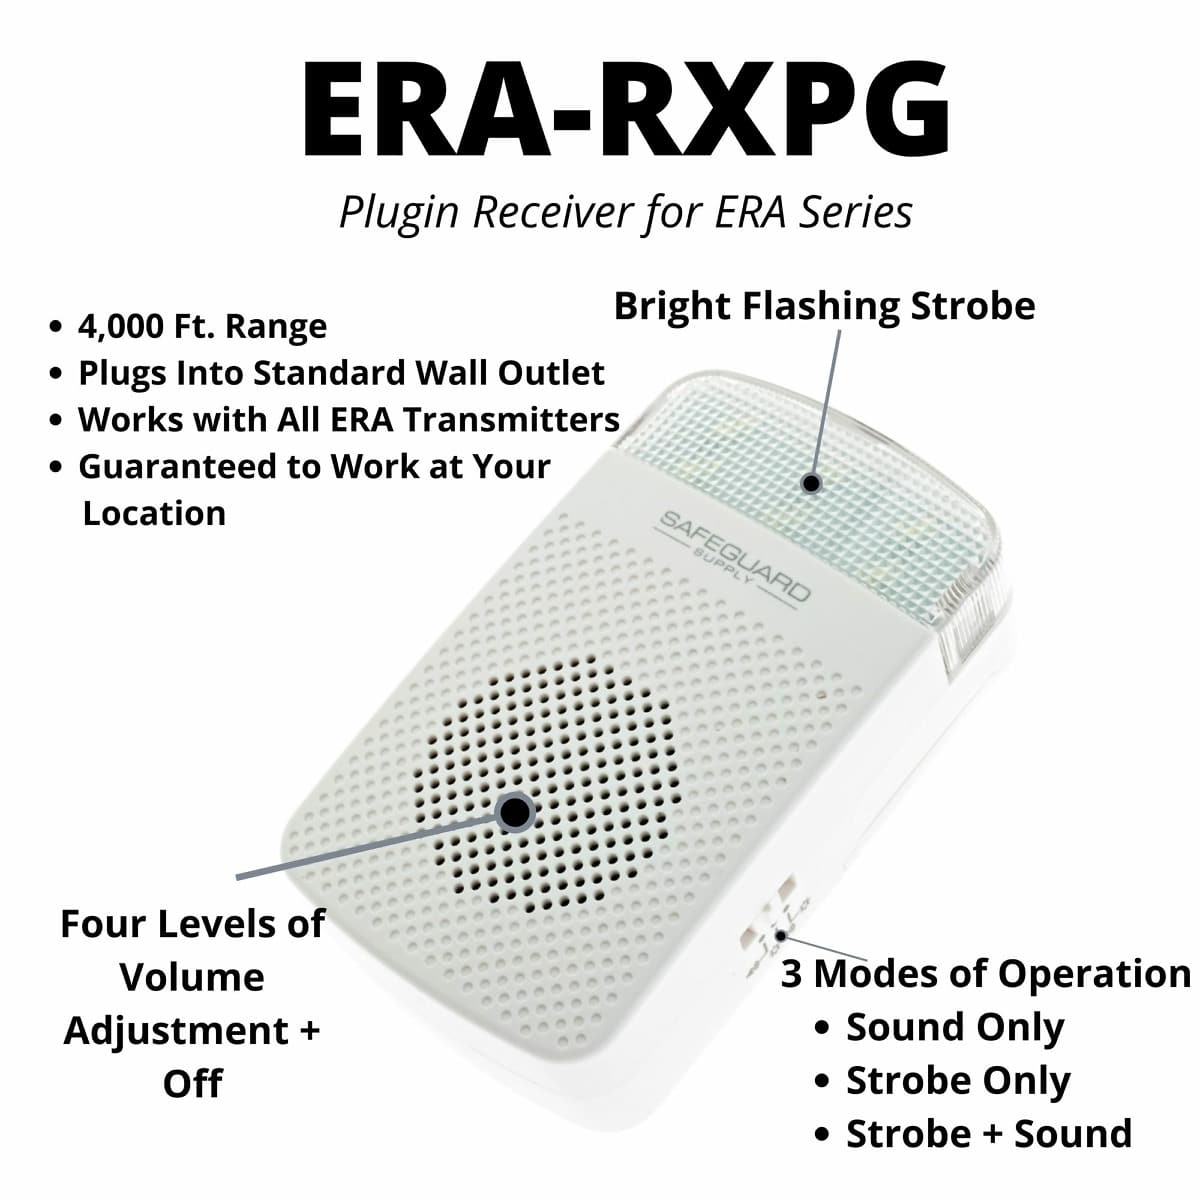 ERA-RXPG Plugin Receiver for ERA Series